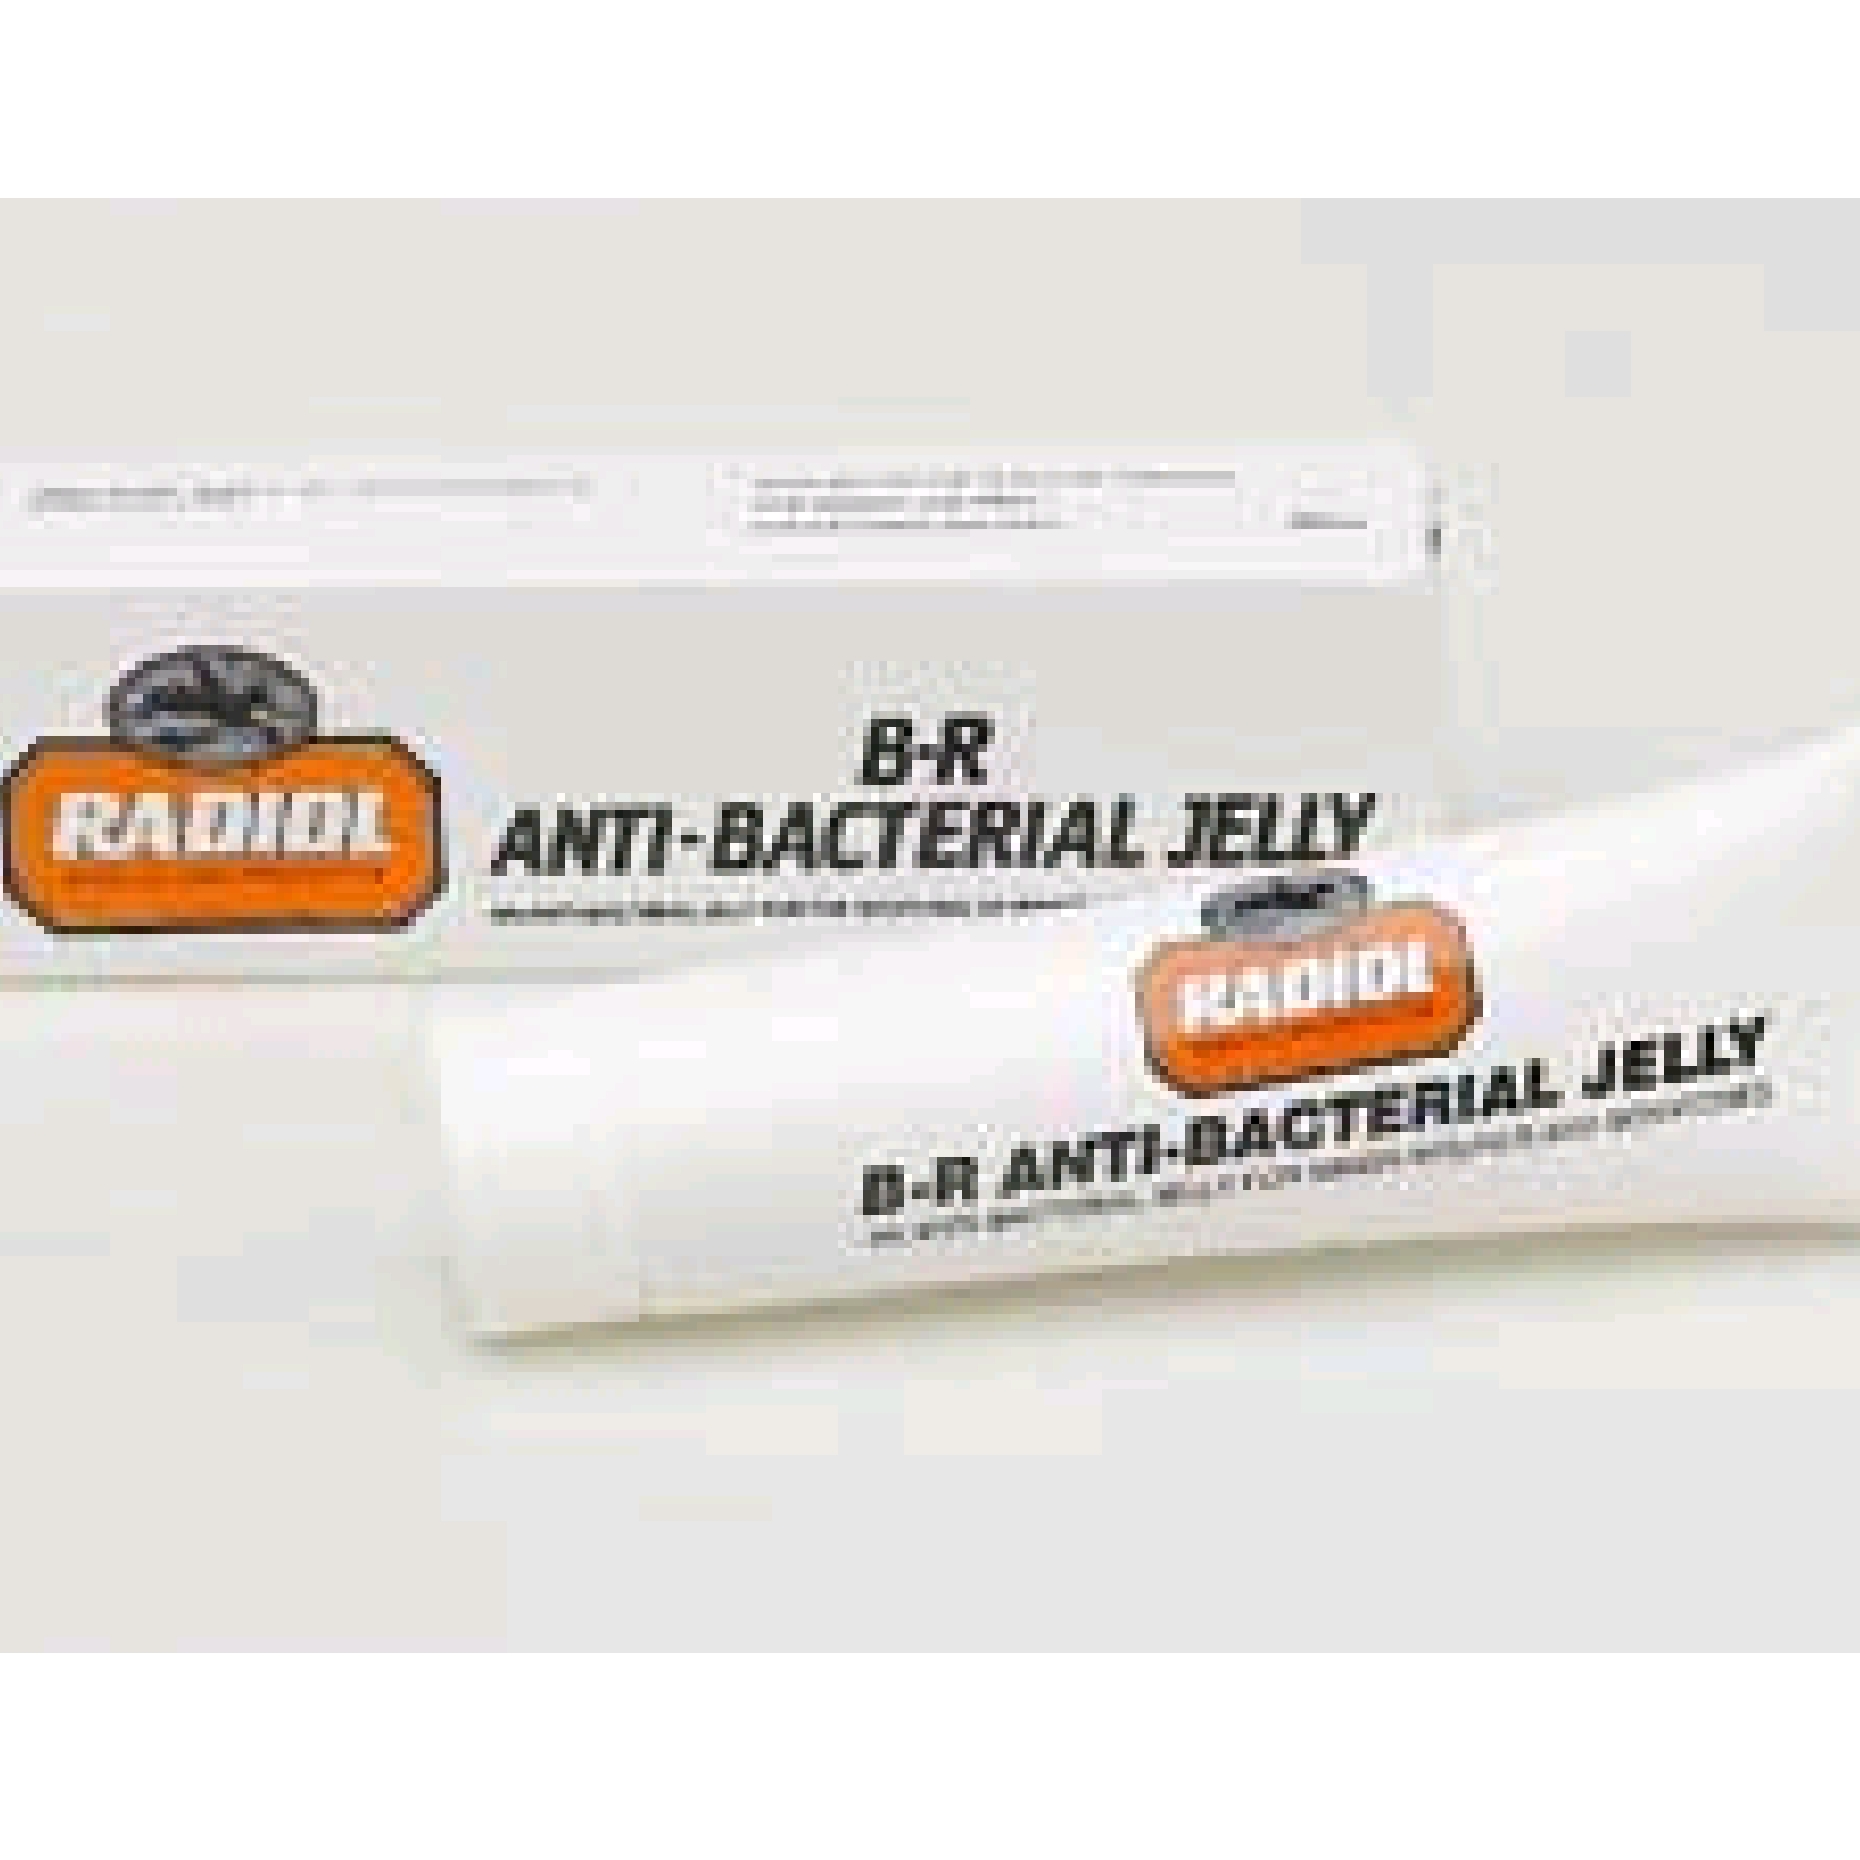 Radiol Antibacterial Jelly